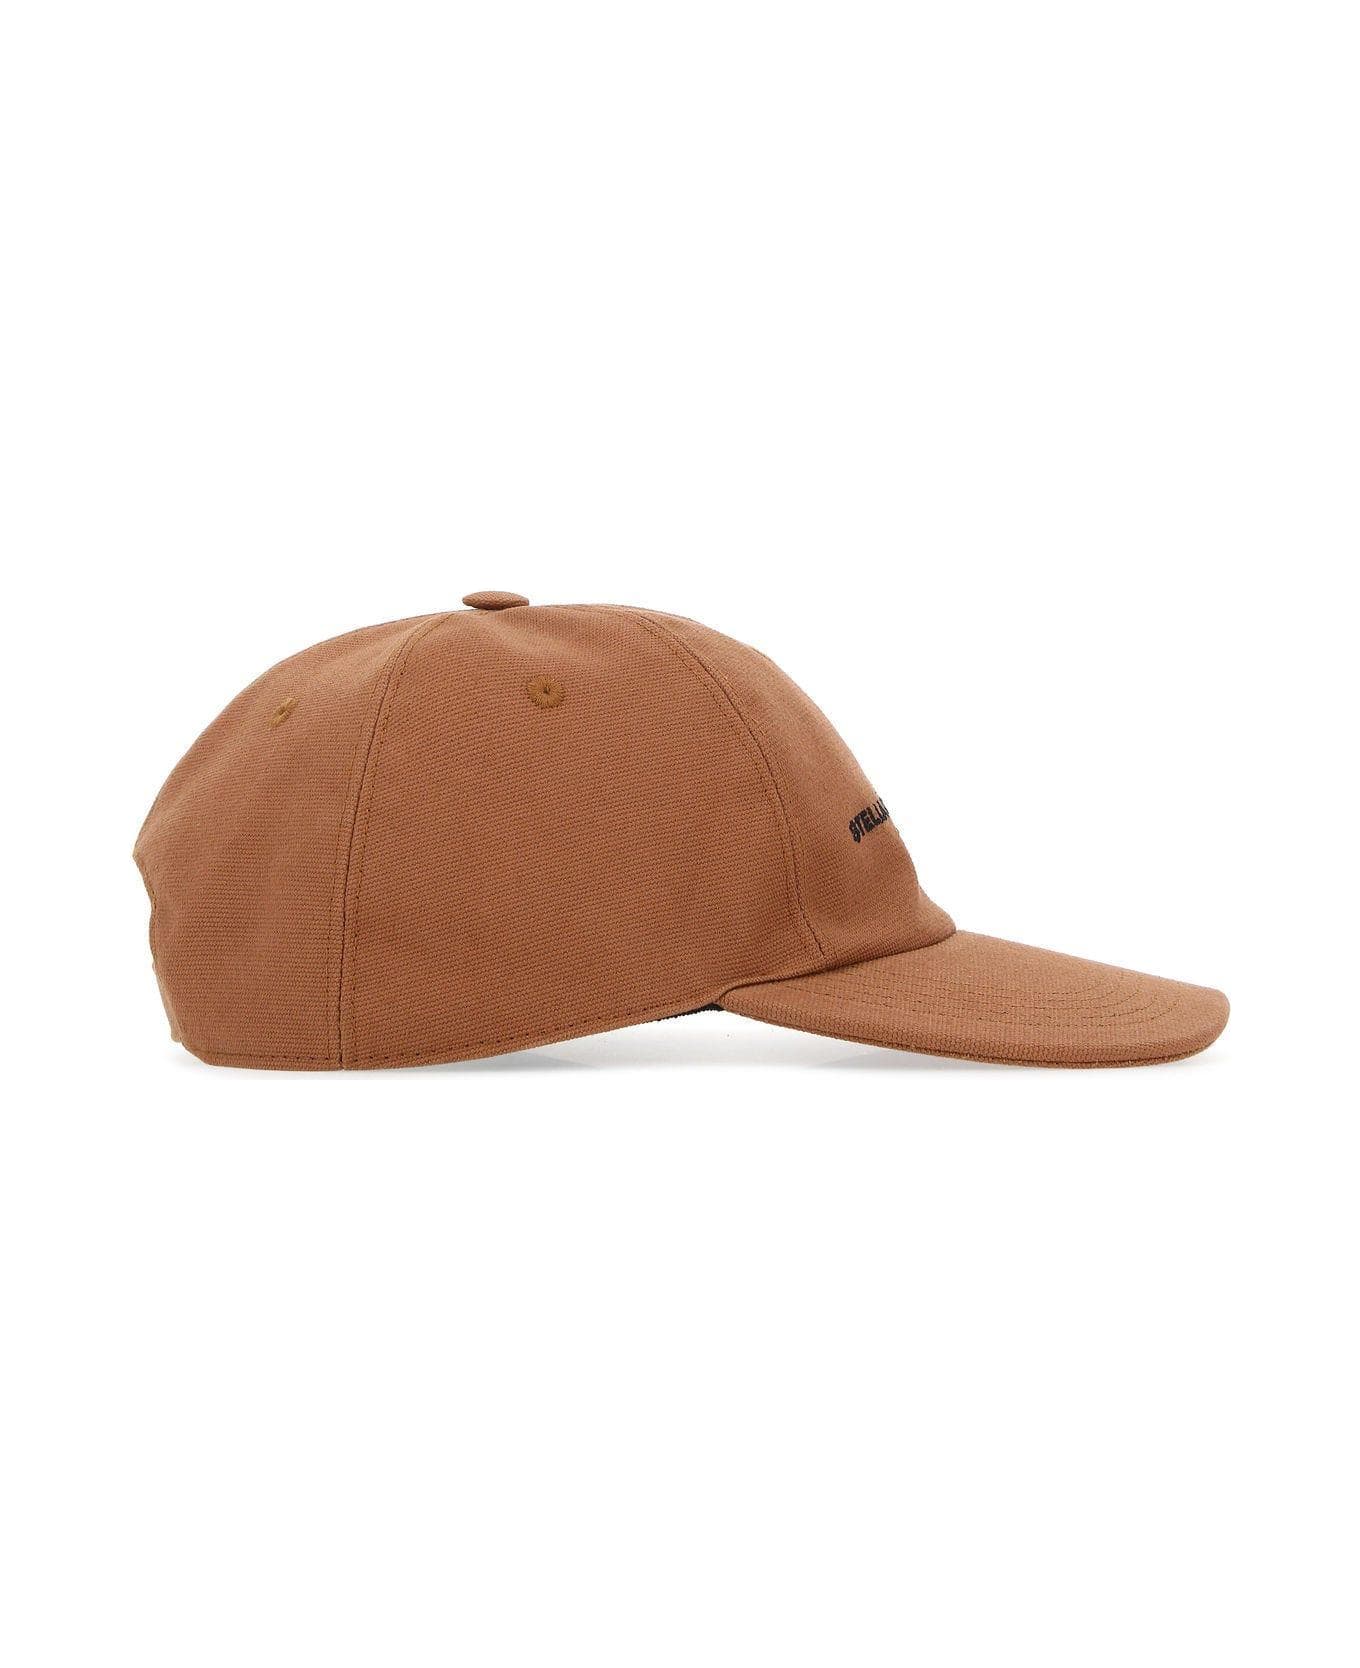 Stella McCartney Caramel Cotton Blend Baseball Cap - Brown 帽子